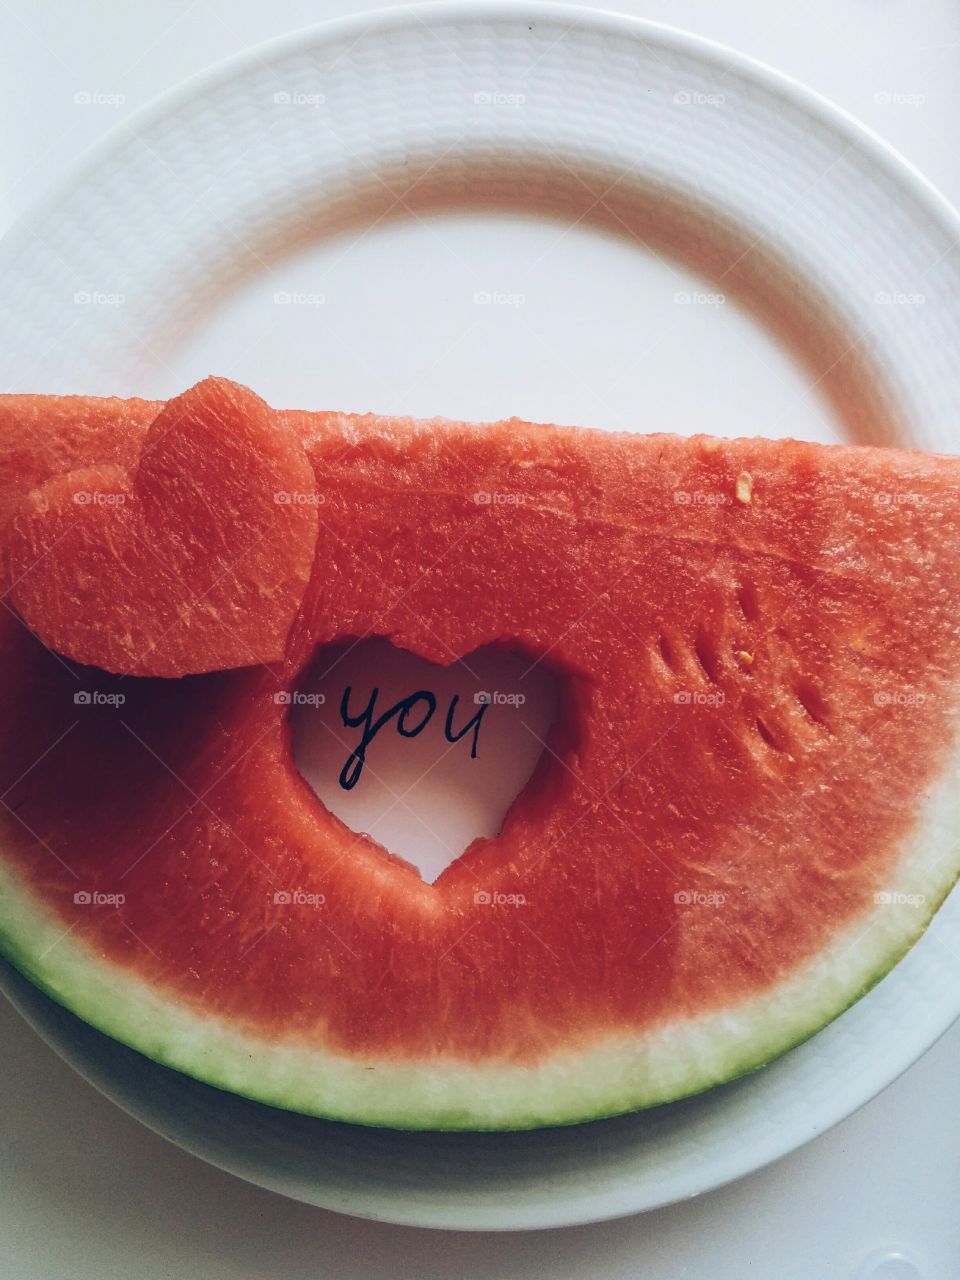  watermelon.  watermelon at heart cut